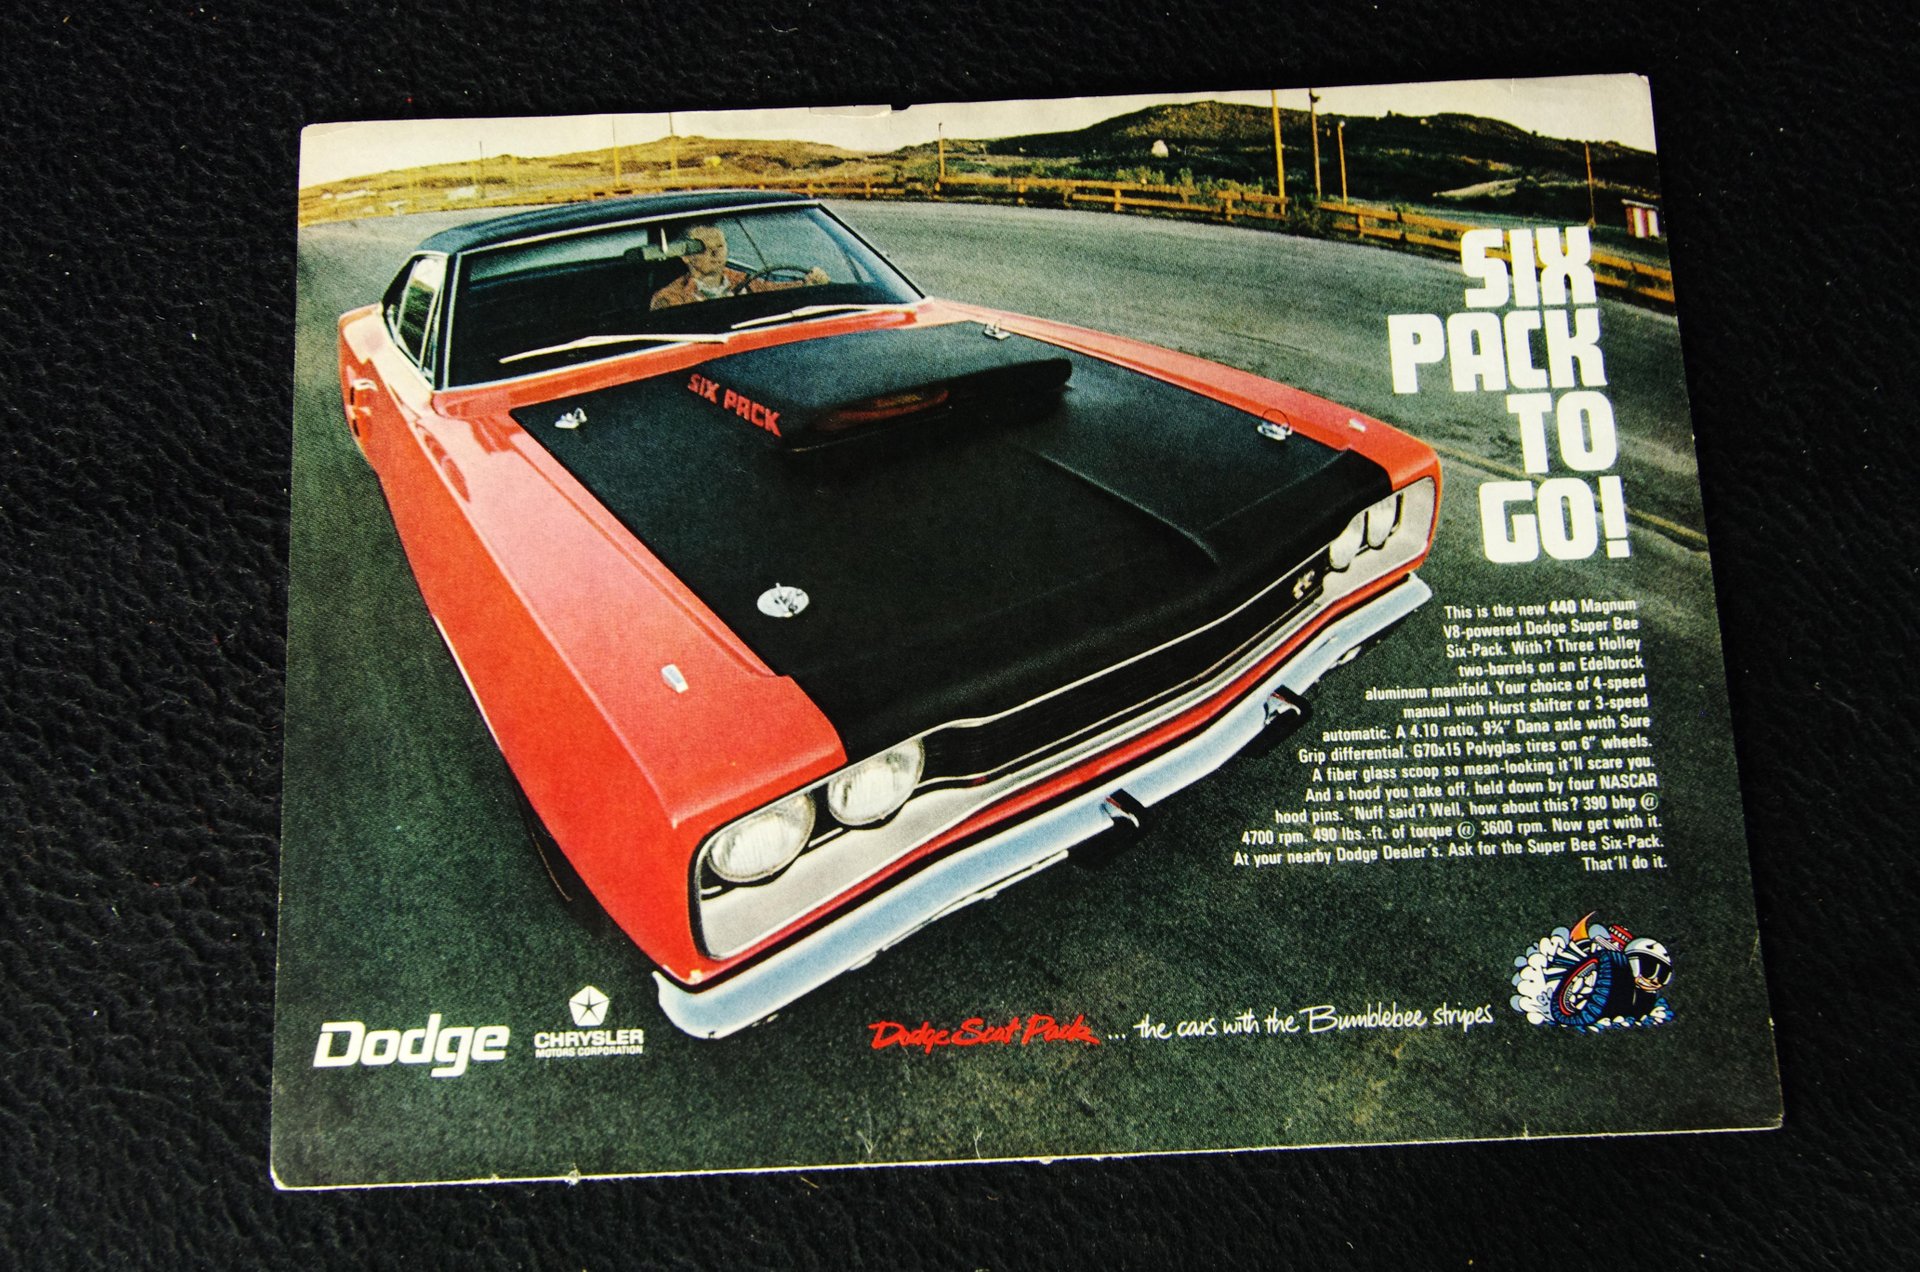 For Sale 1969 1/2 Dodge Coronet